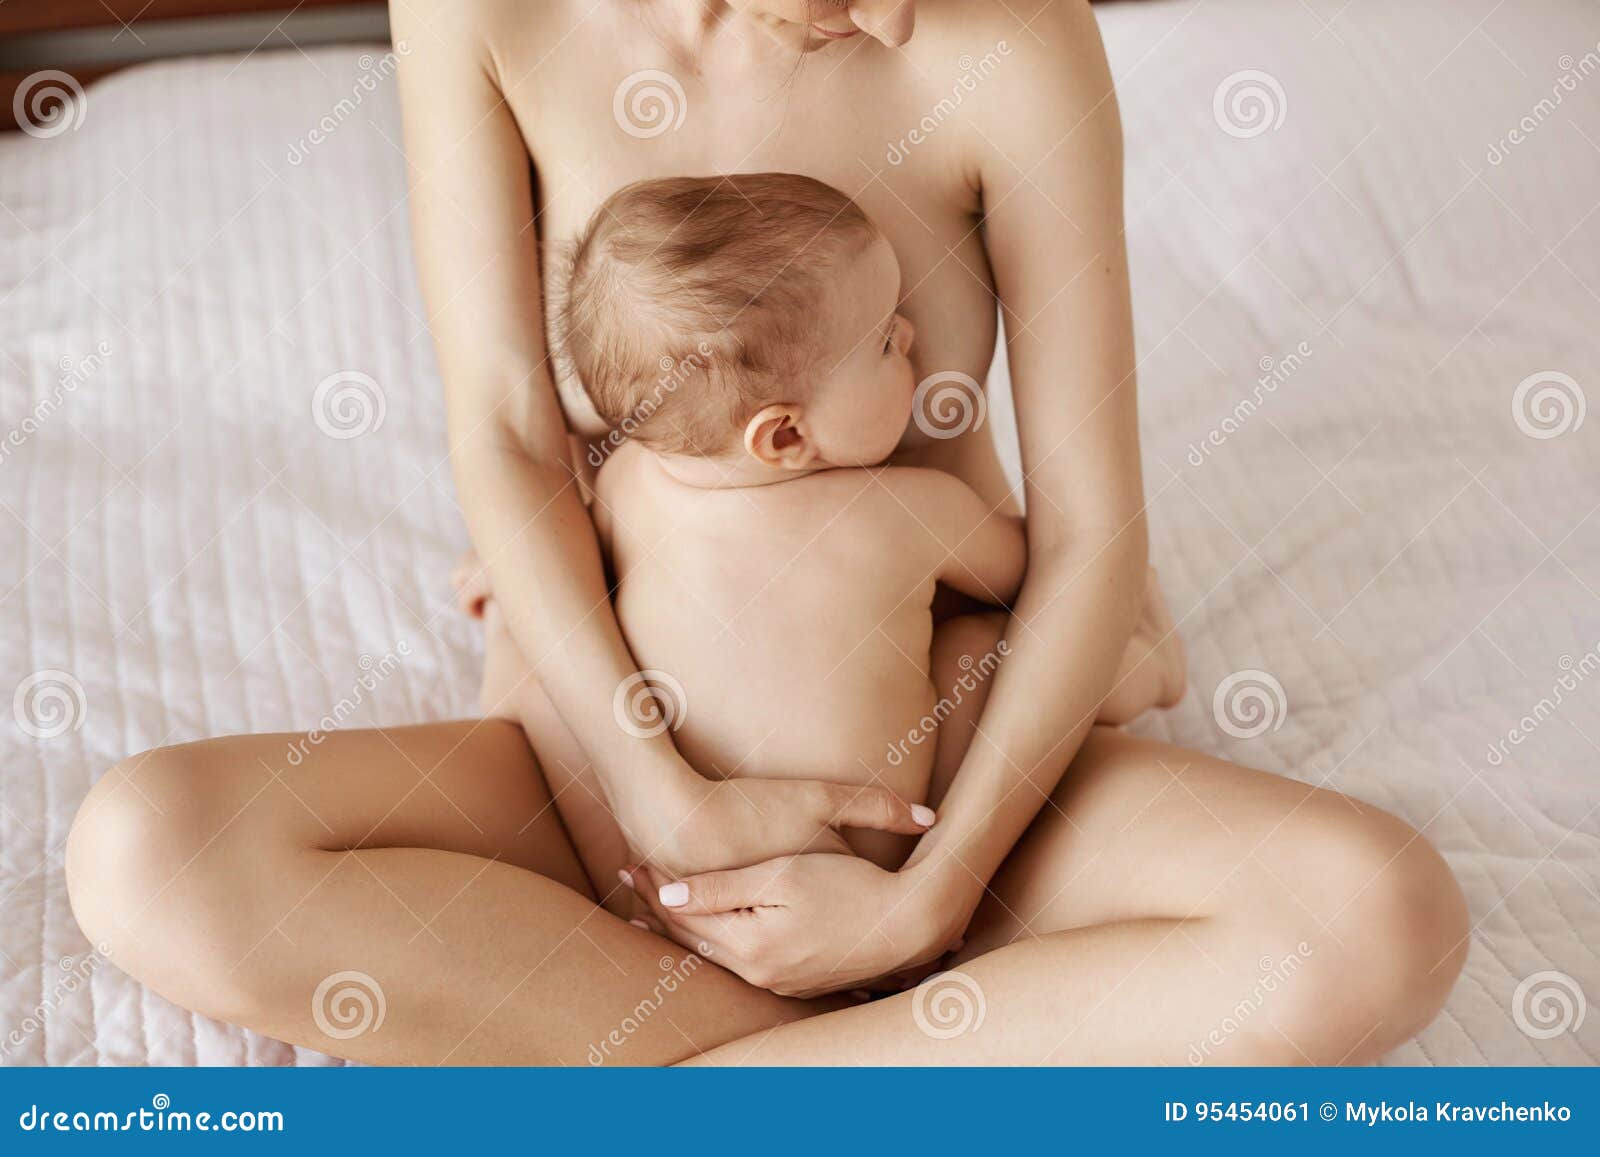 Nude Beach Breastfeeding